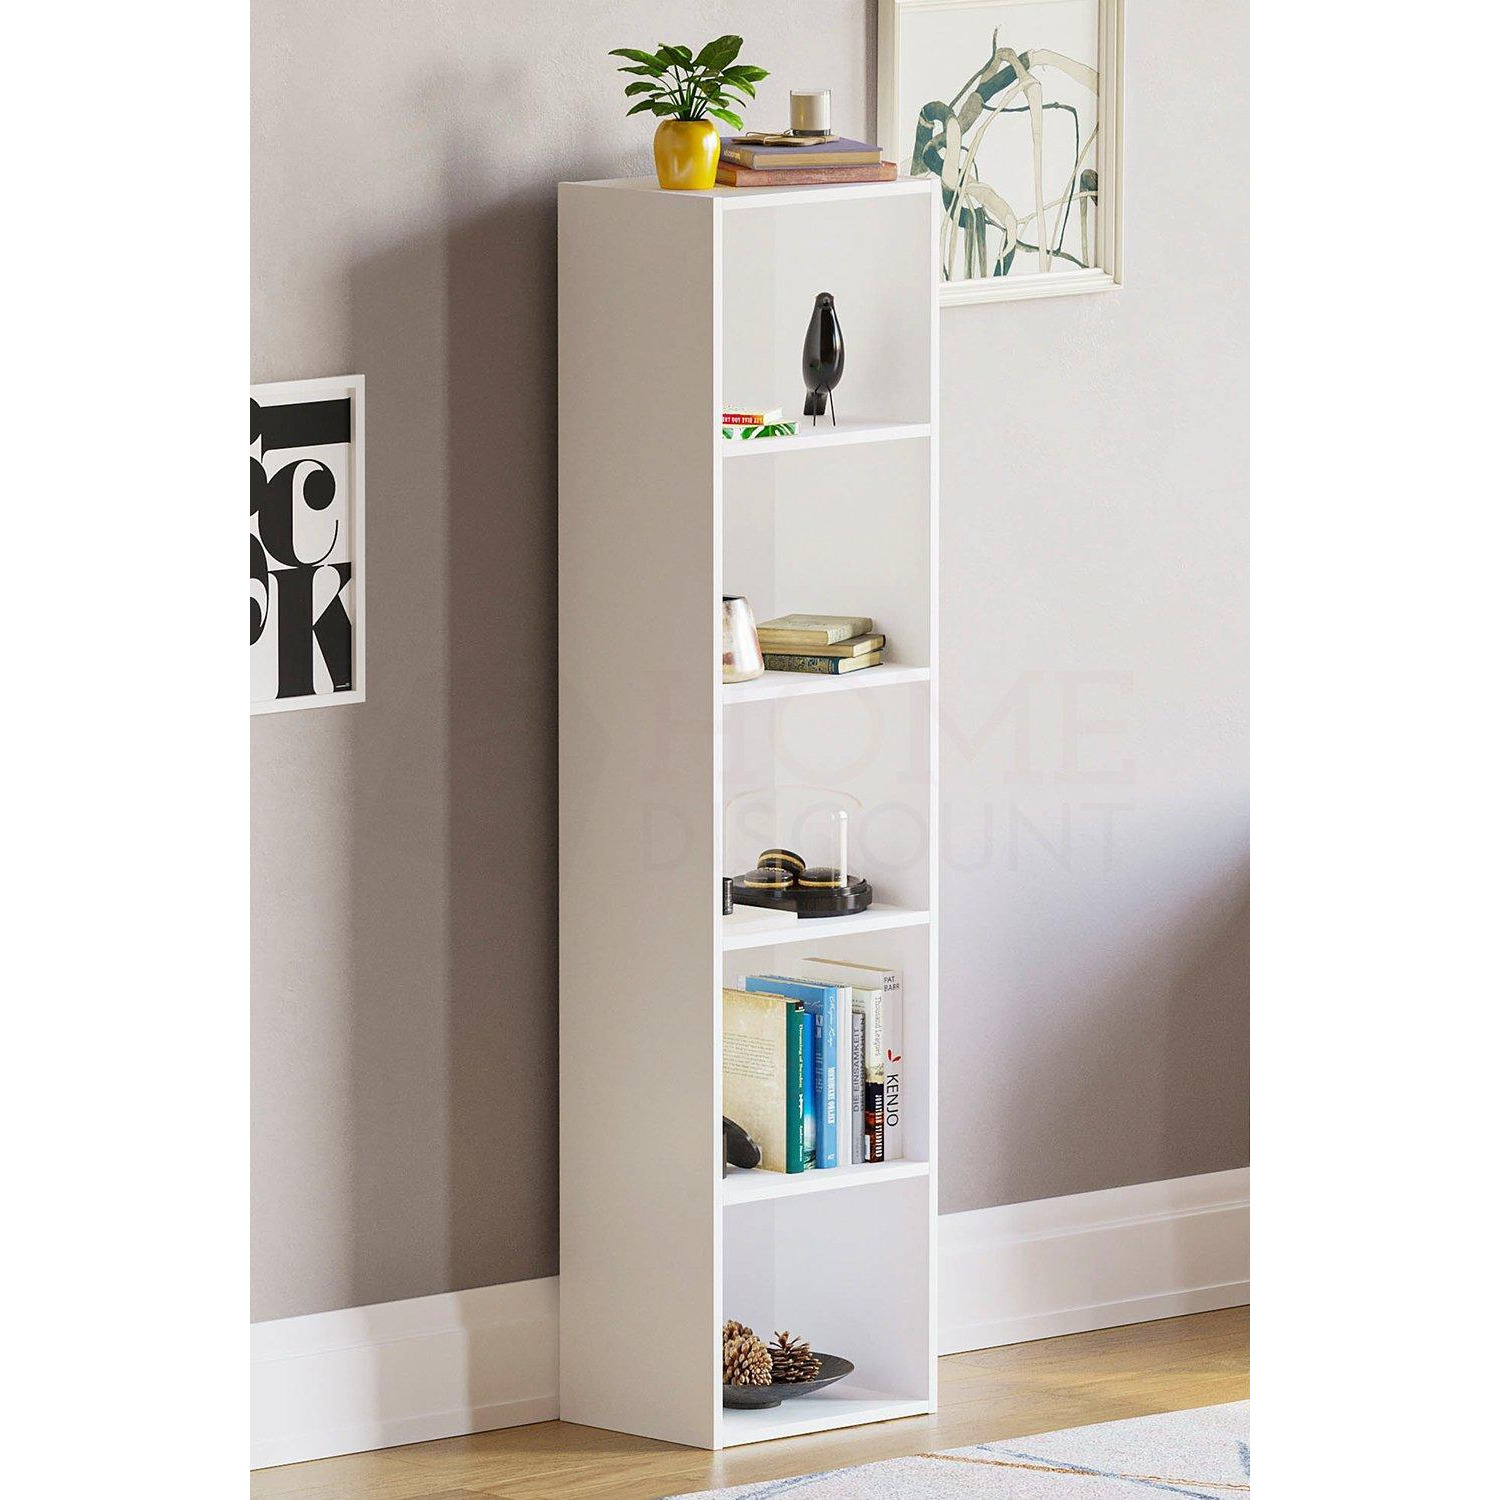 Vida Designs Oxford 5 Tier Cube Bookcase Storage 1320 x 320 x 240 mm - image 1